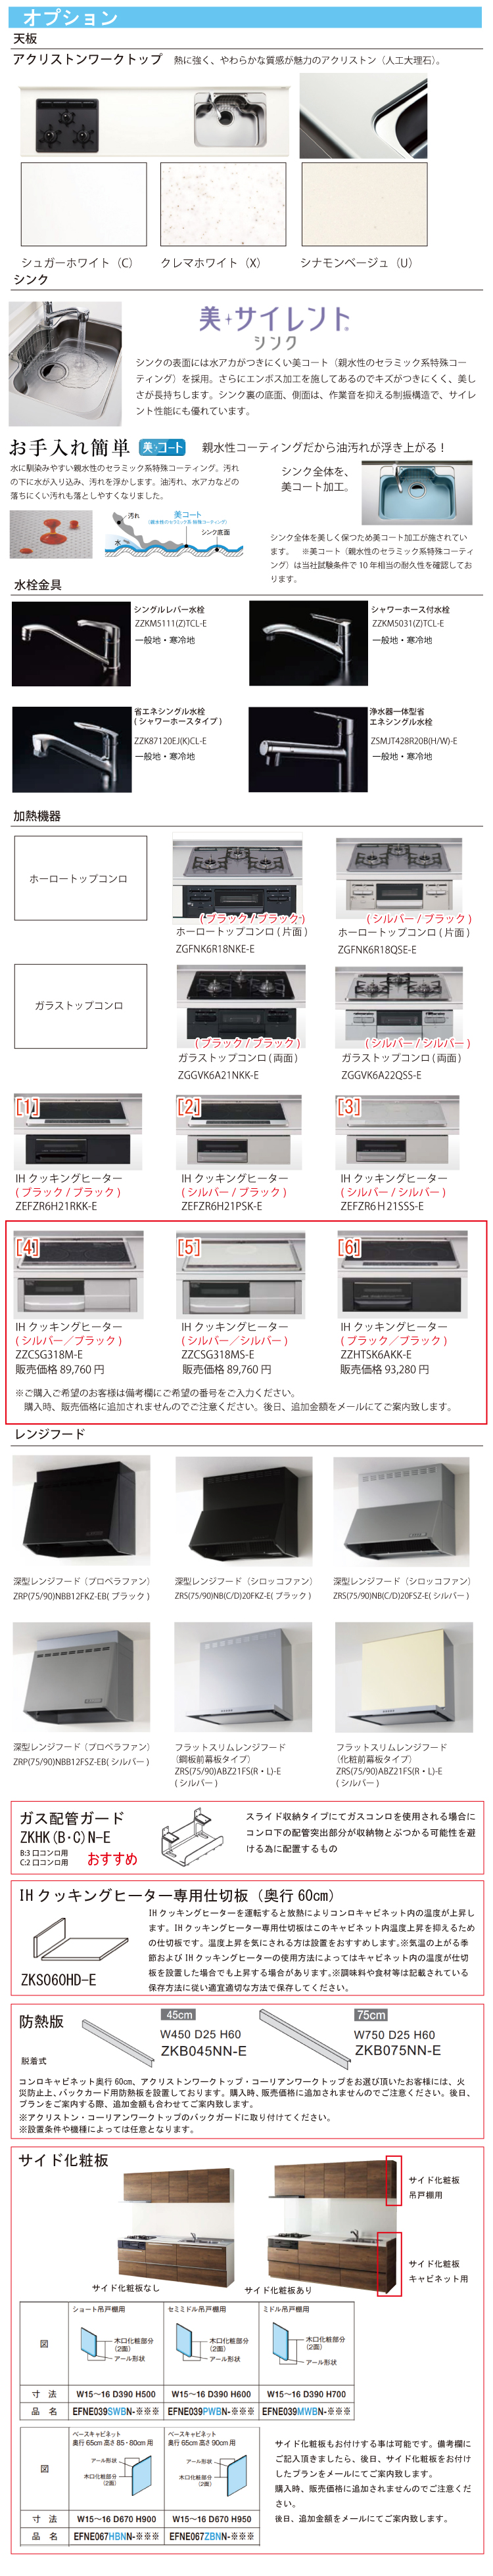 YMP-VVA-6740V TMG ARIAFINA 横幕板 ※横幕板だけの販売は行っておりません。 ※沖縄,離島への販売は出来ません。